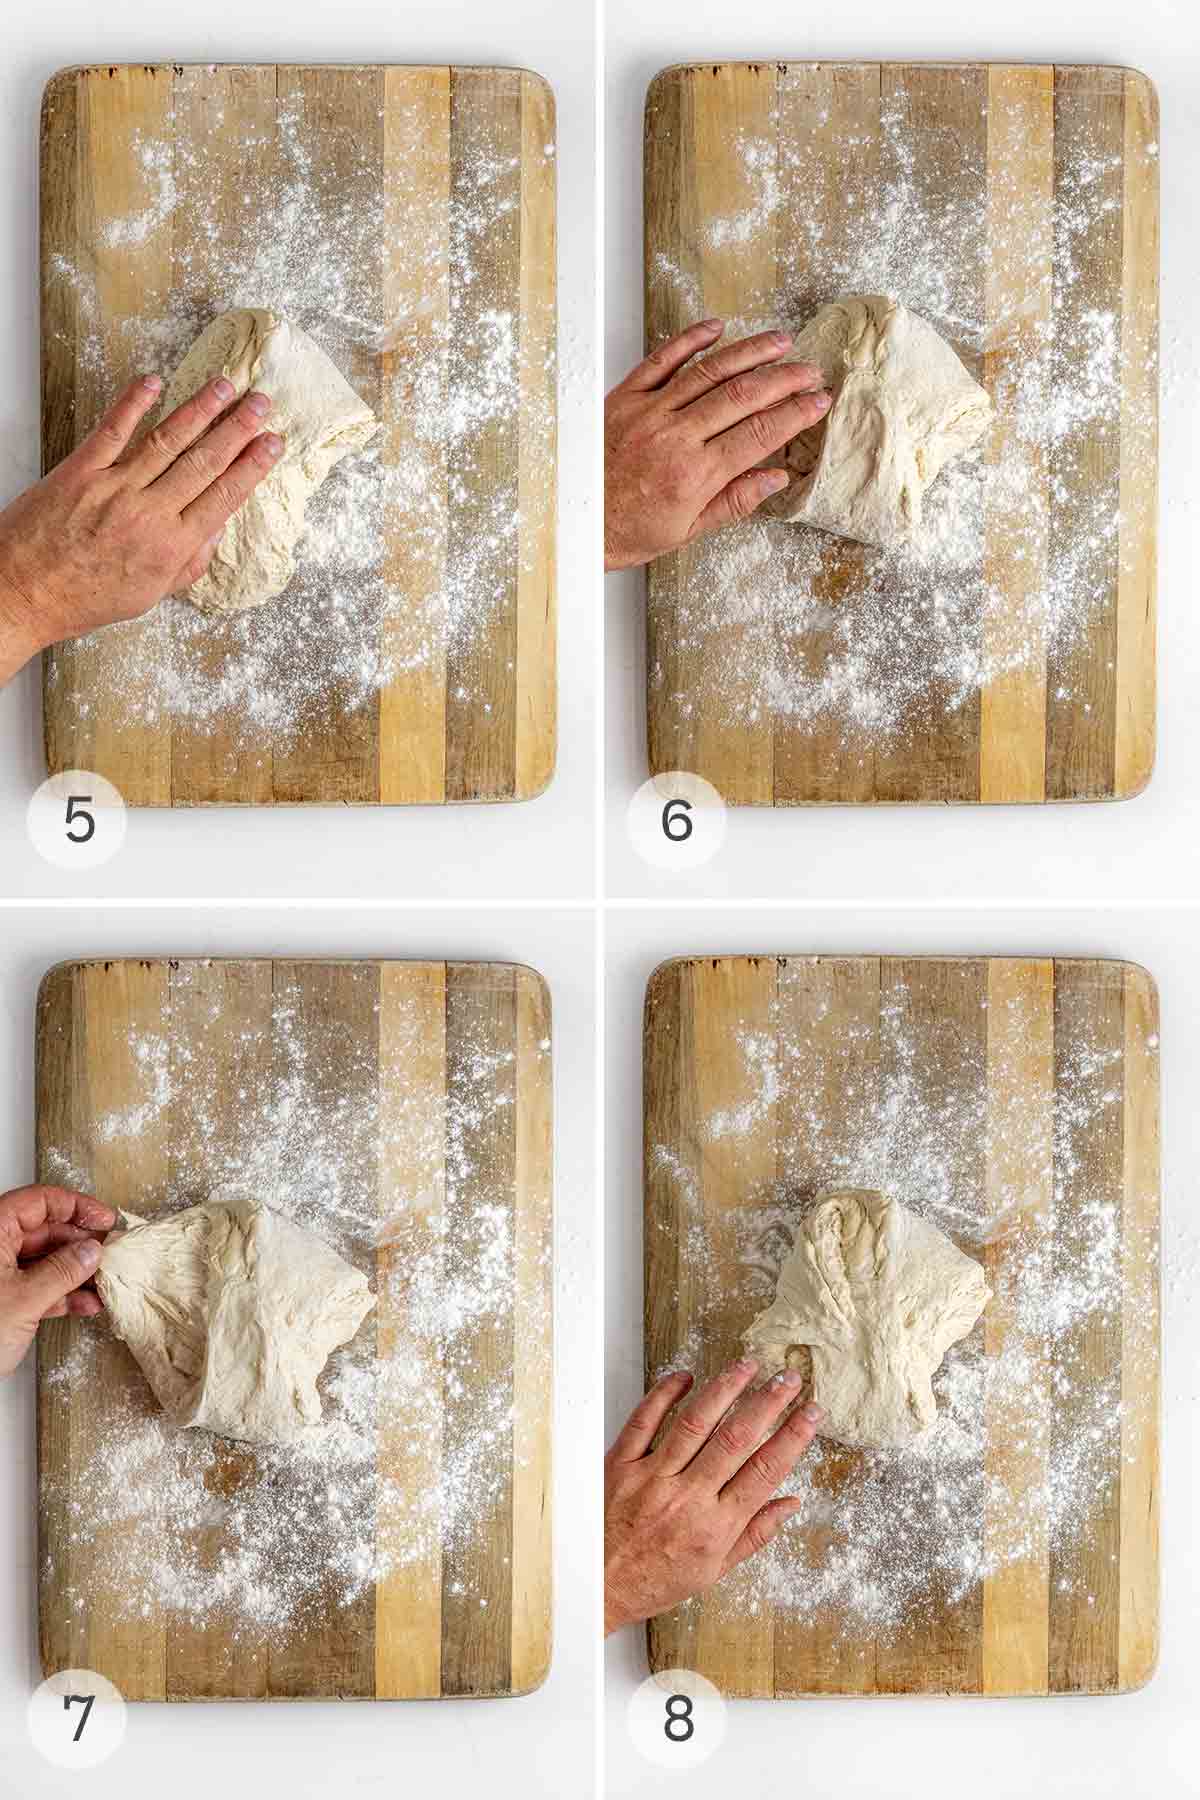 A person folding a round of bread dough.